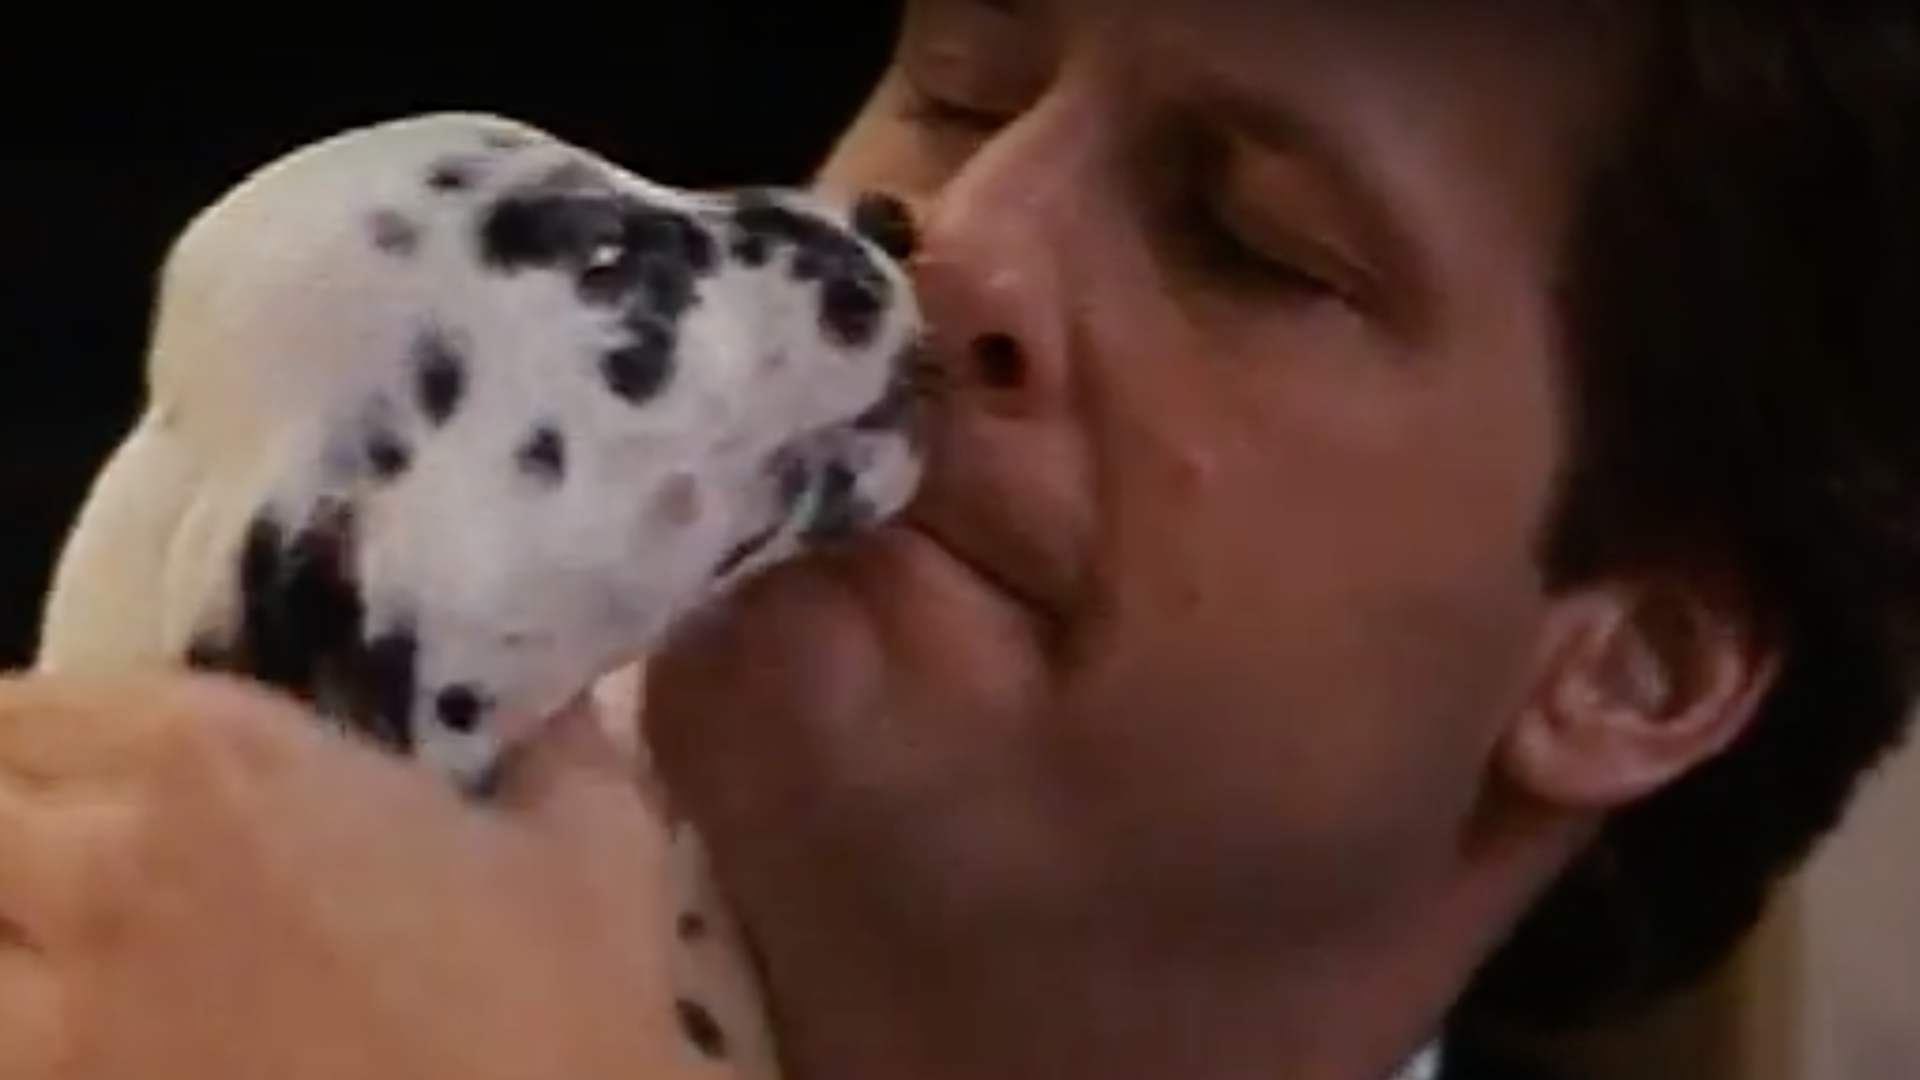 A scene from the 101 Dalmatians trailer